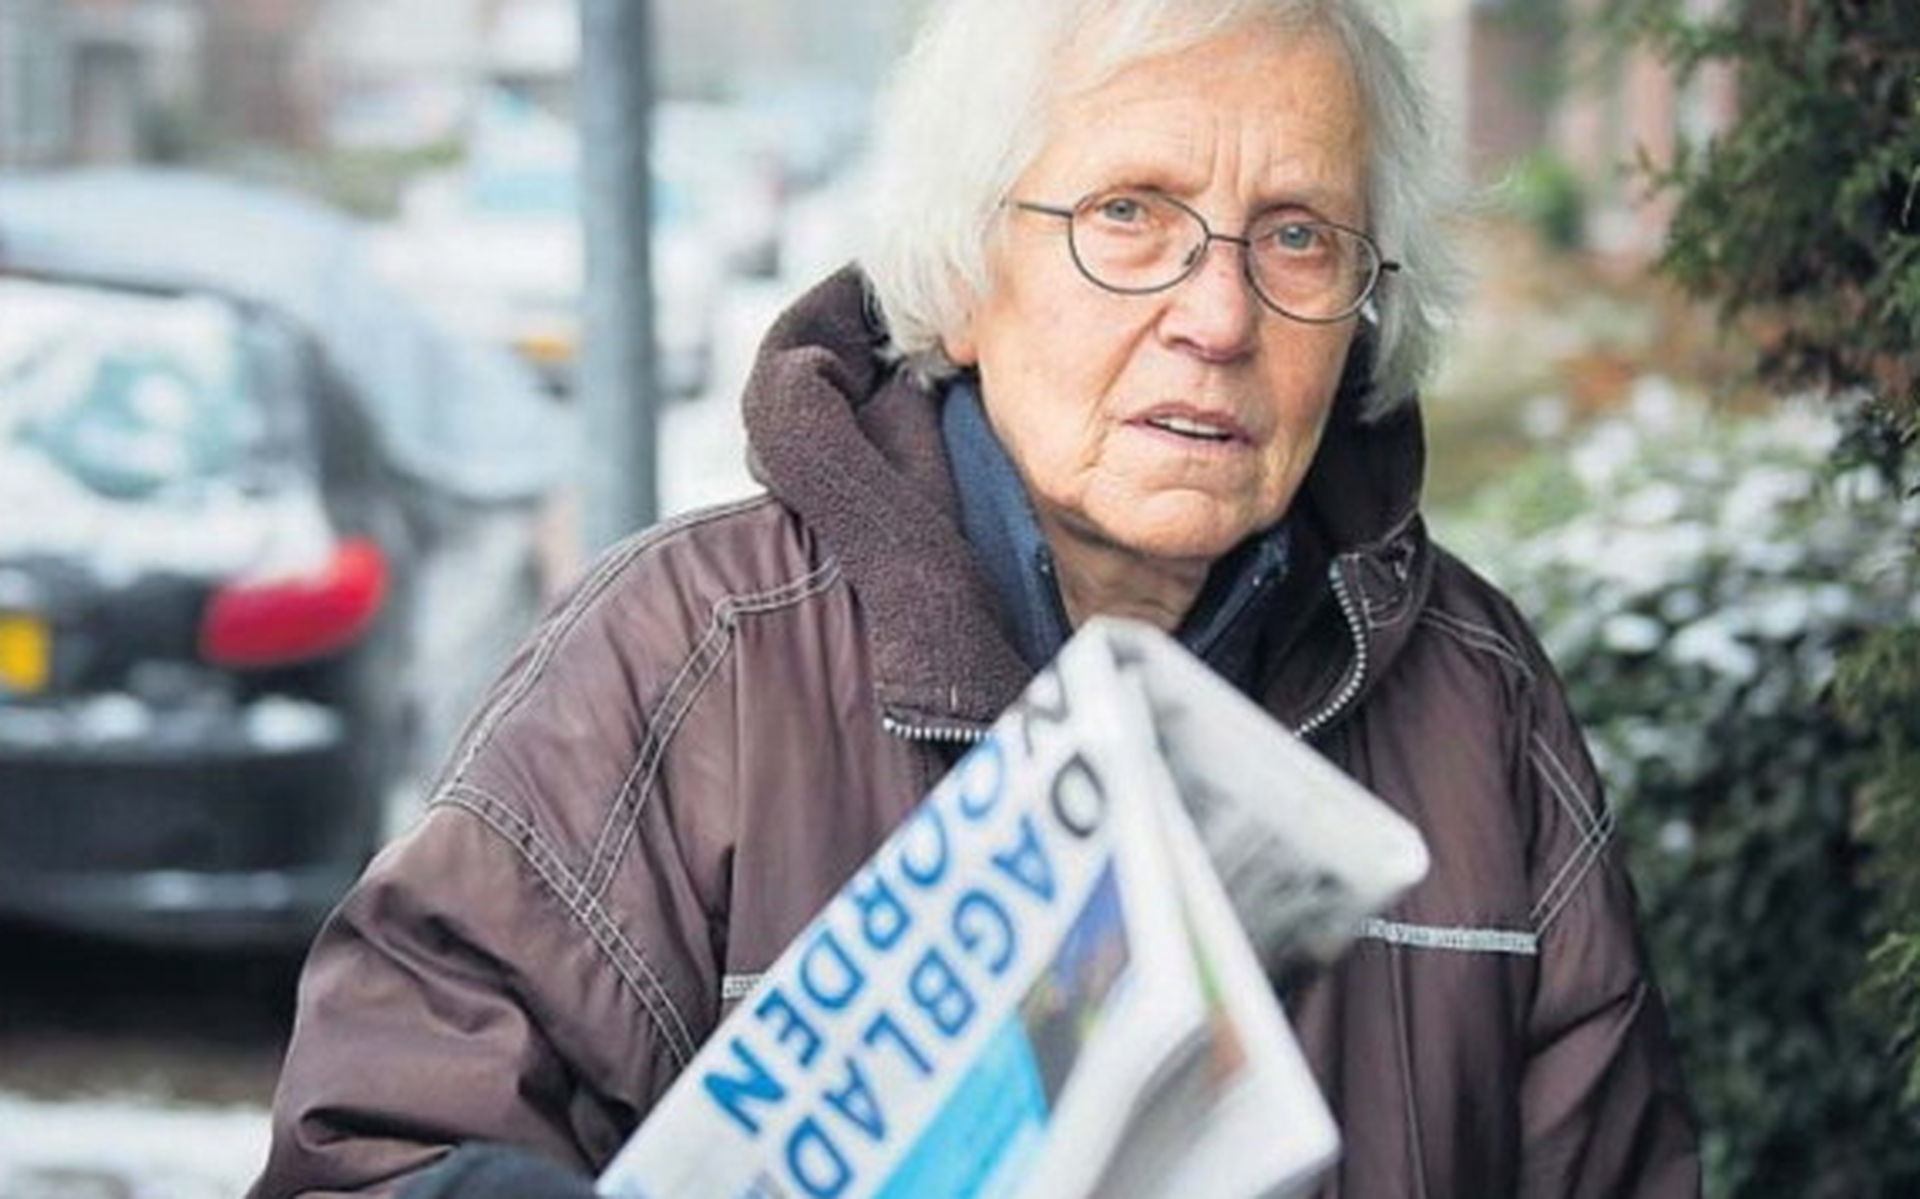 Krantenbezorgster Wilma Wijkmans (76). Foto Jaspar Moulijn